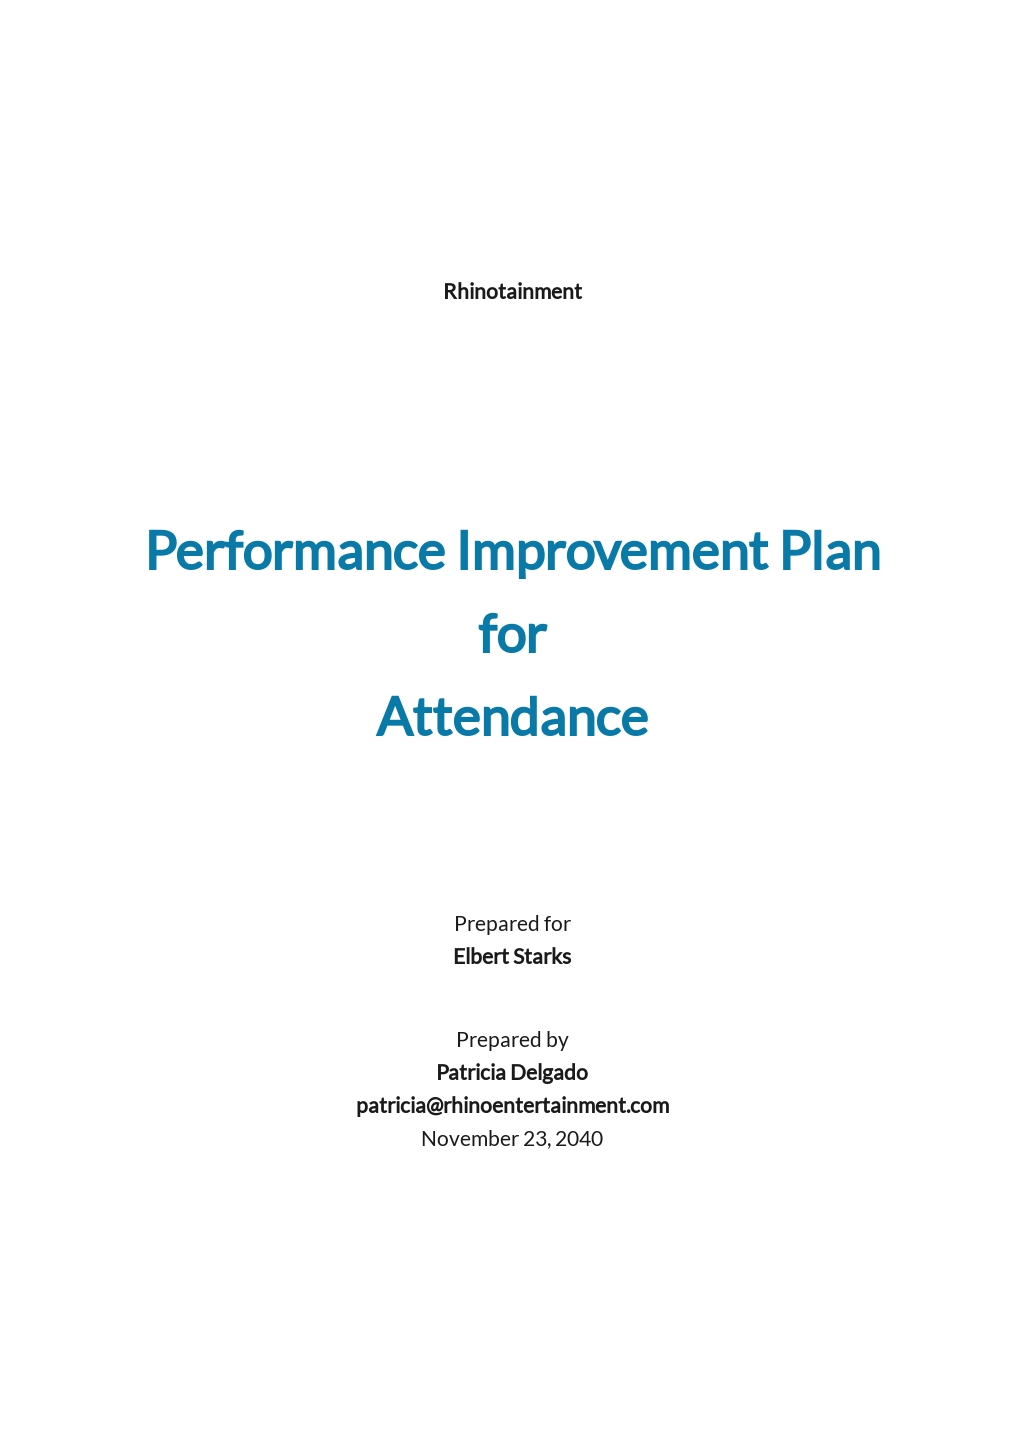 Performance Improvement Plan for Attendance Template.jpe